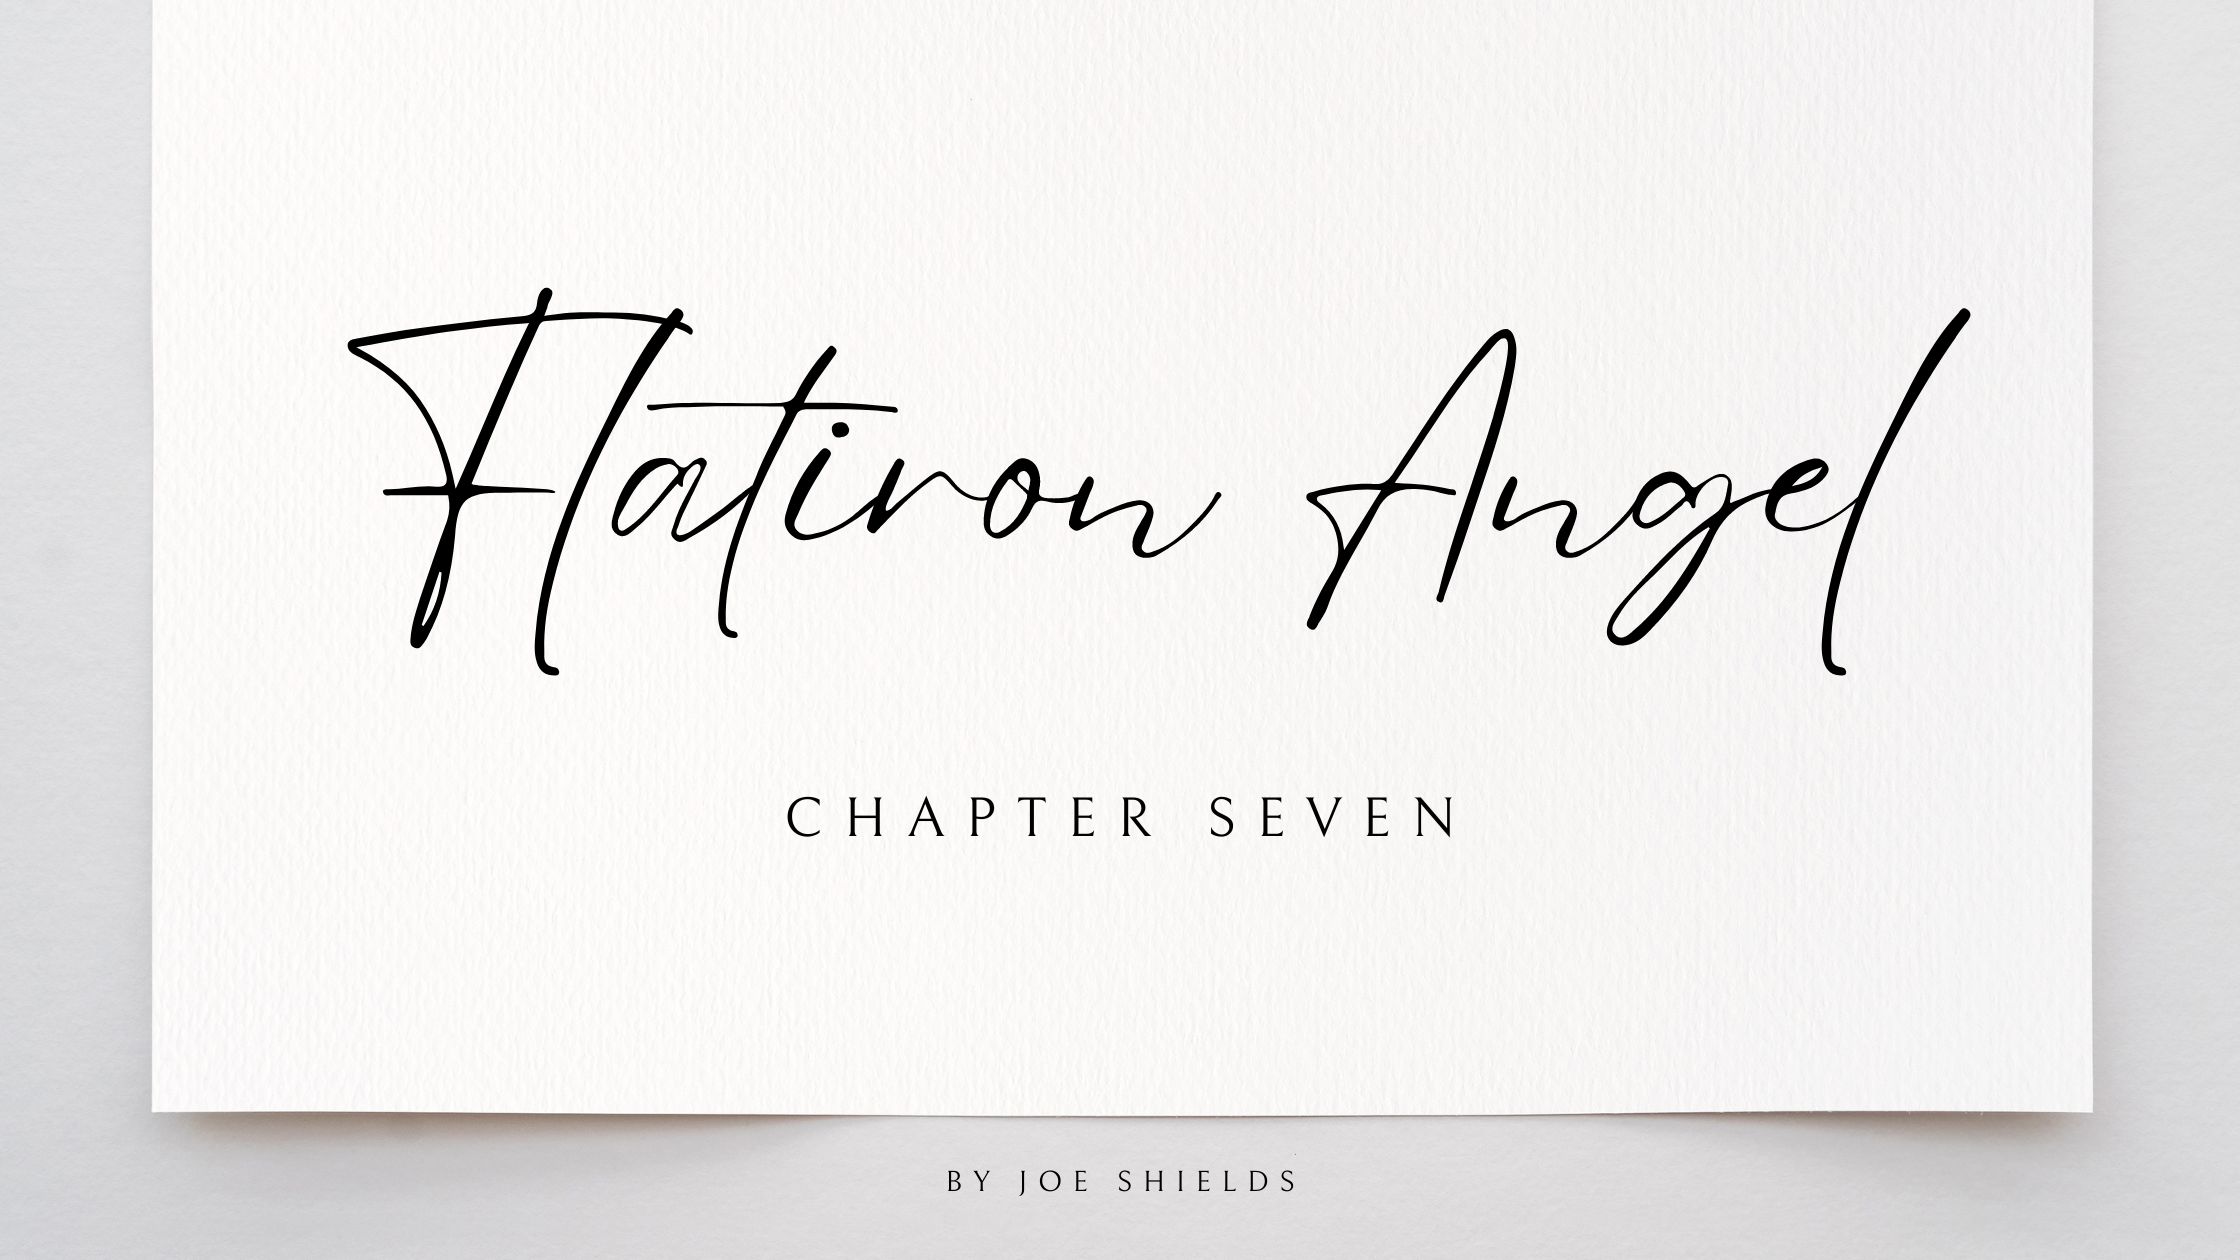 Flatiron-Angel-Chapter-Seven-by-Joe-Shields